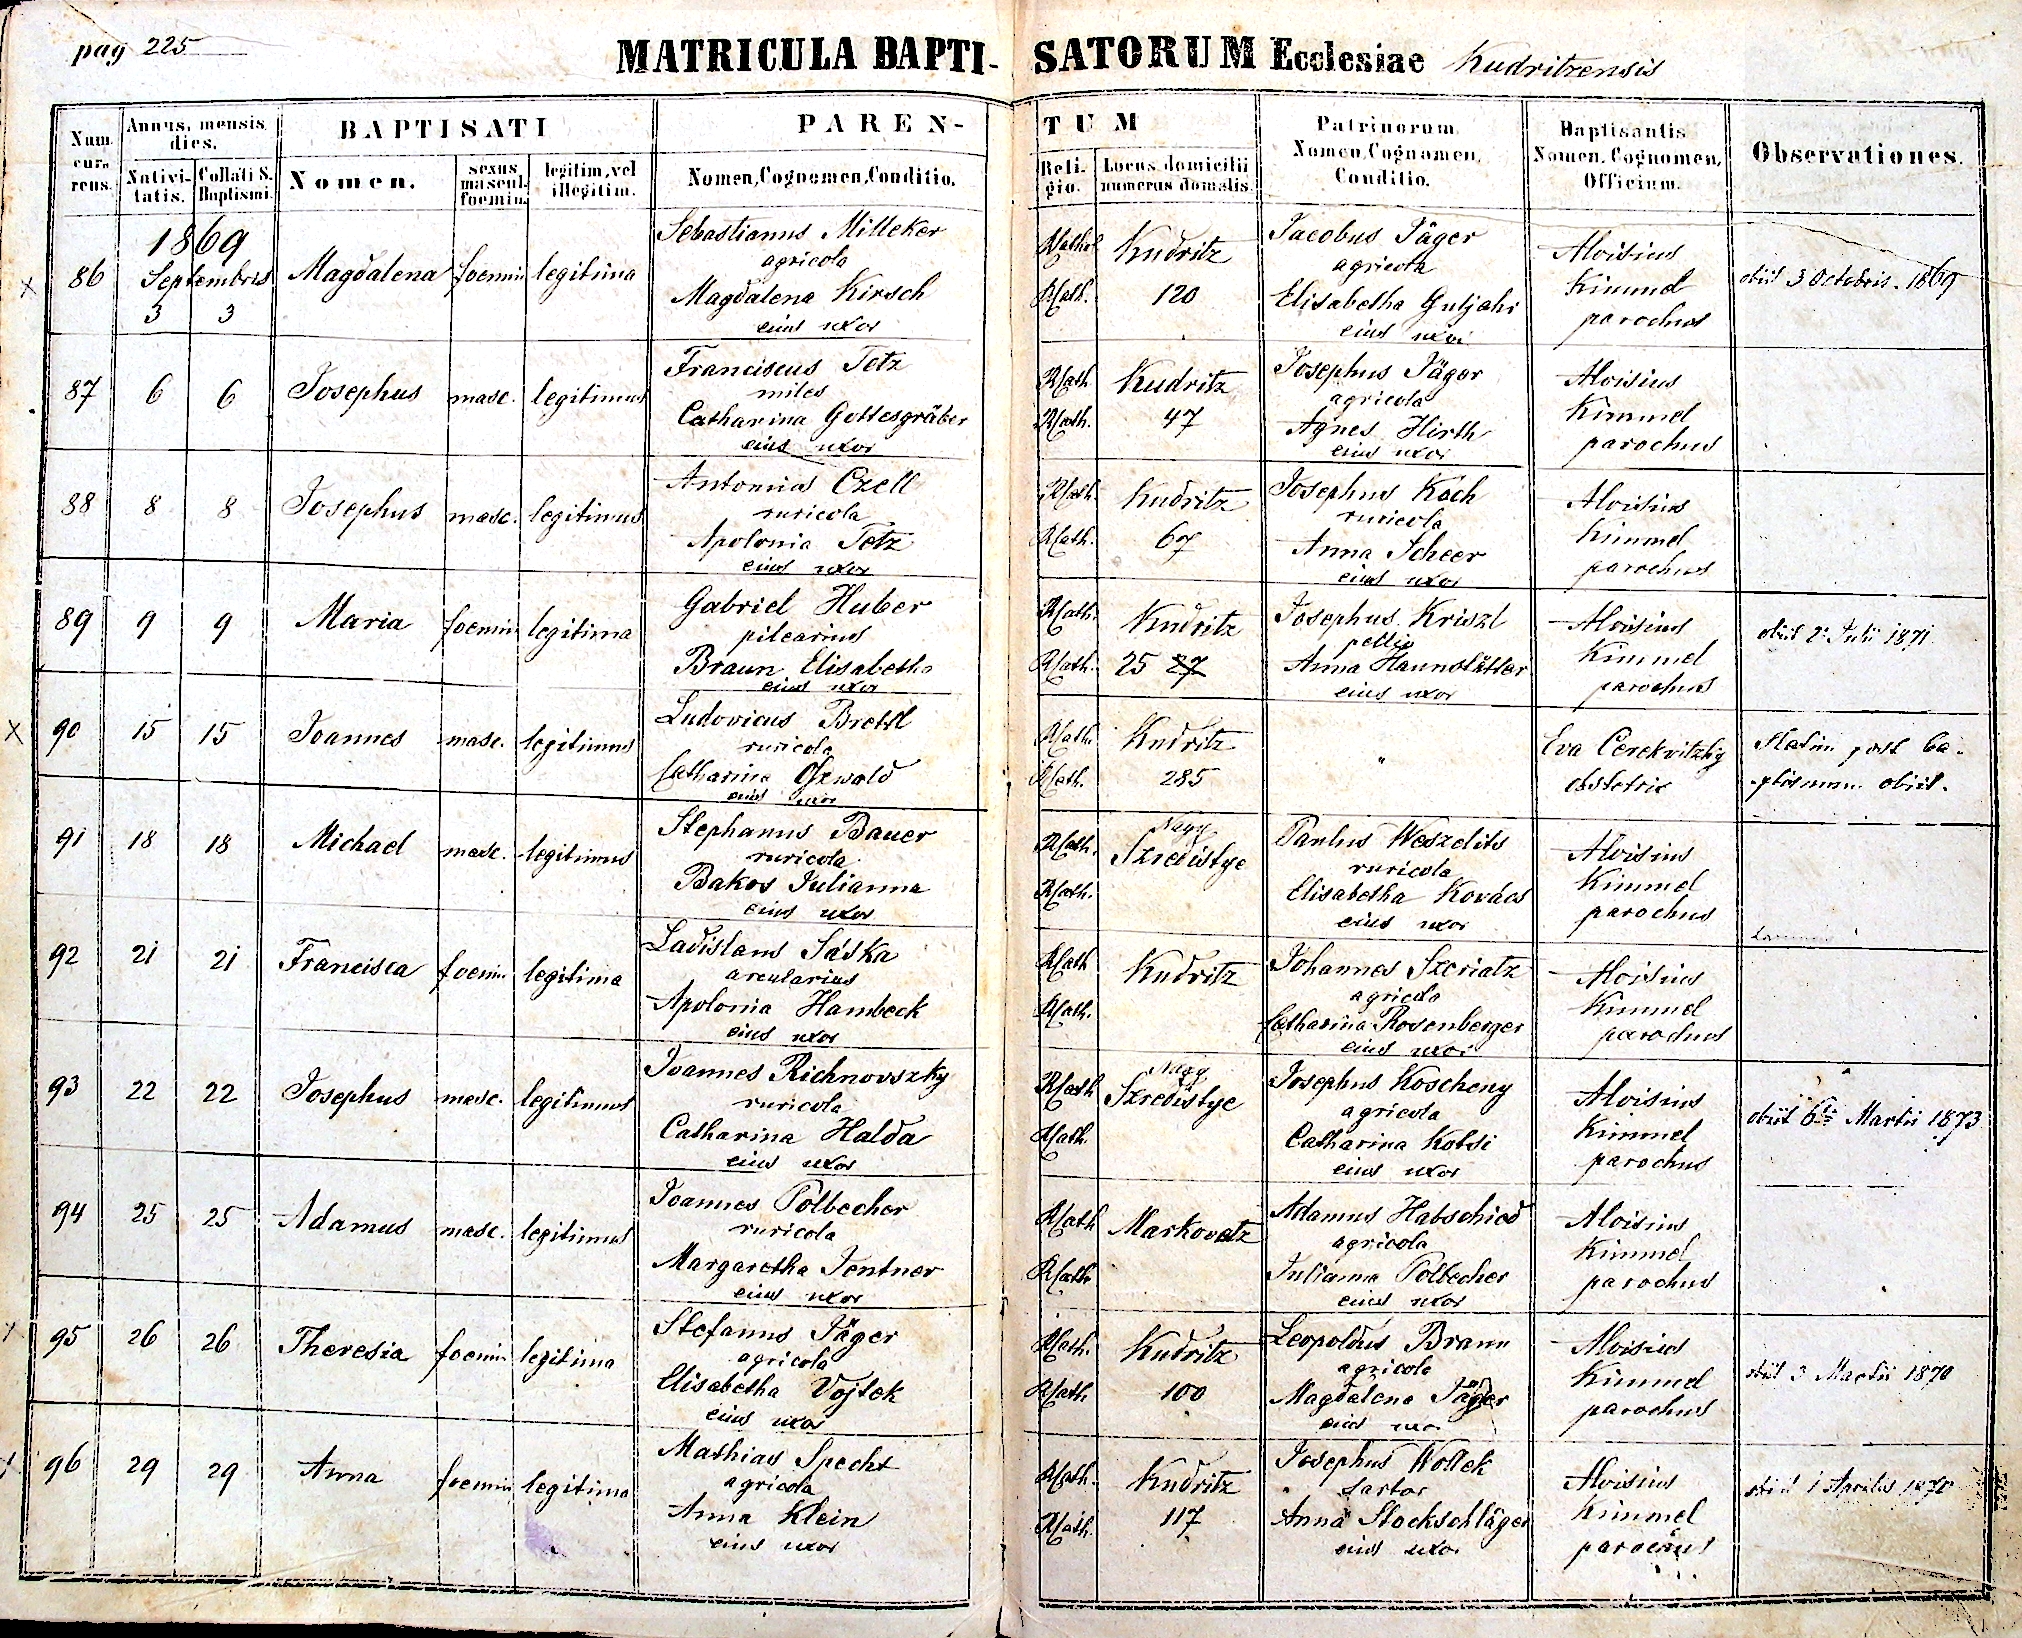 images/church_records/BIRTHS/1852-1870B/225